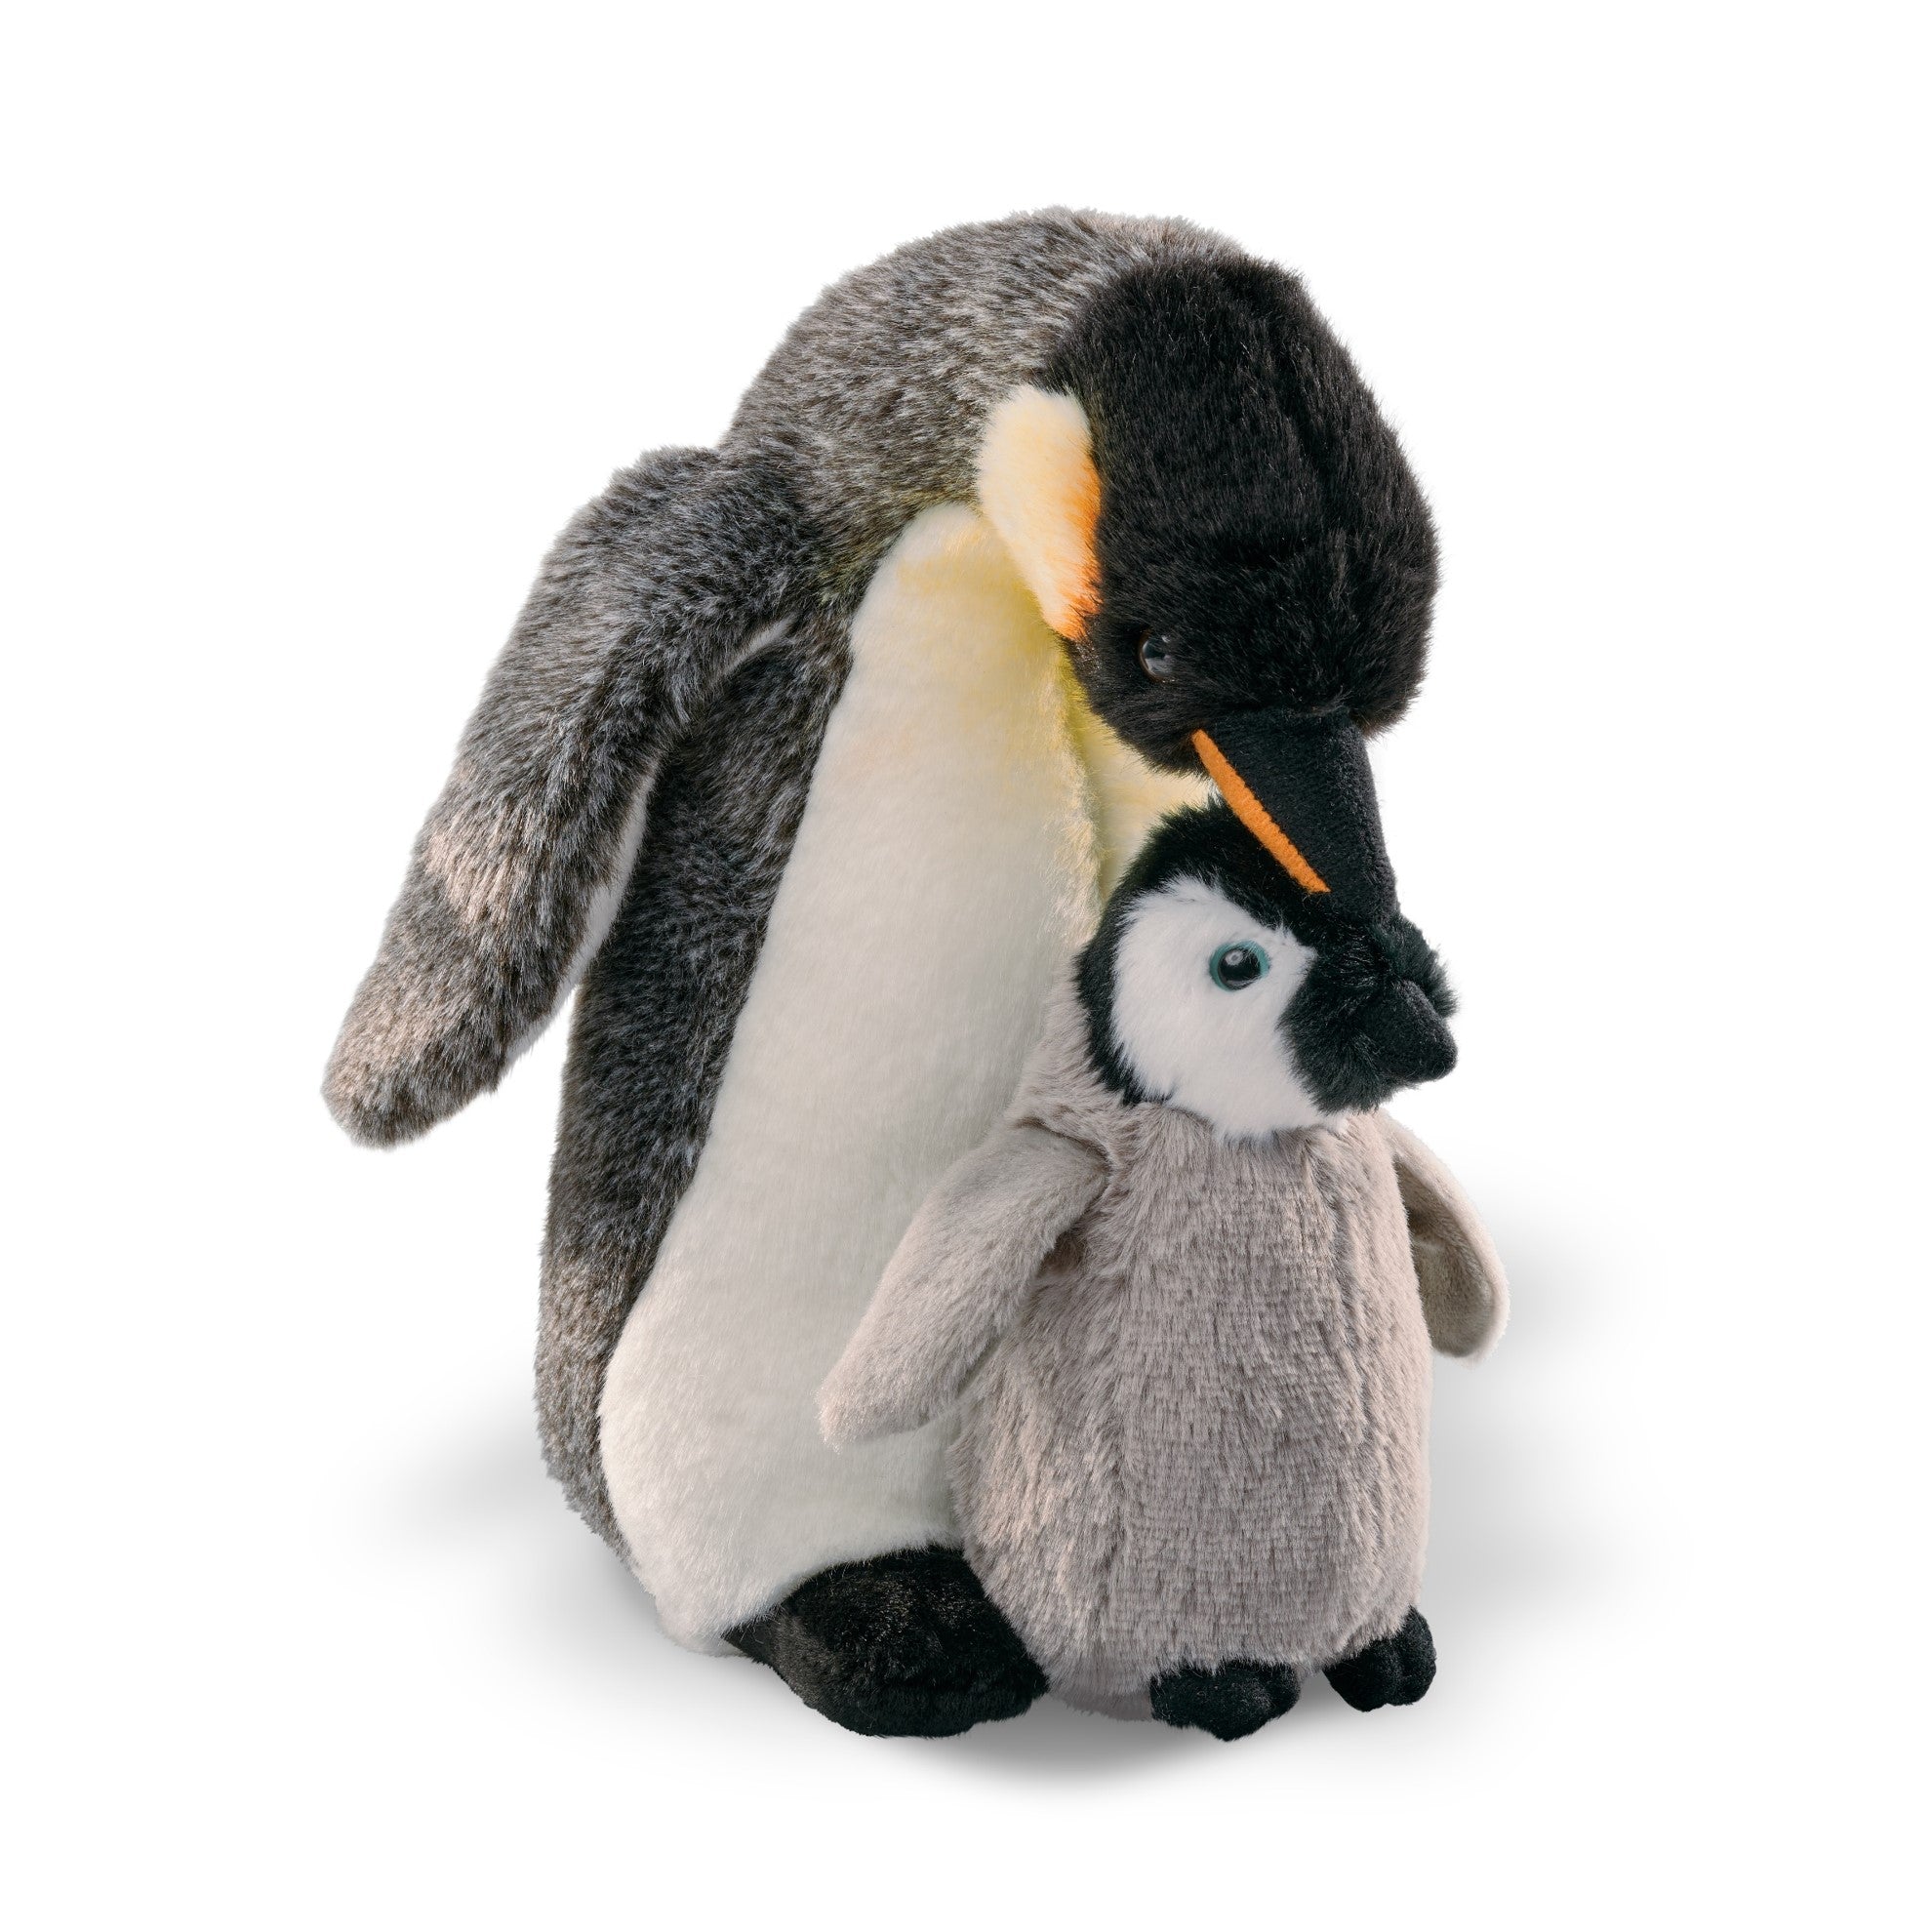 Emperor penguin family - WWF-Canada